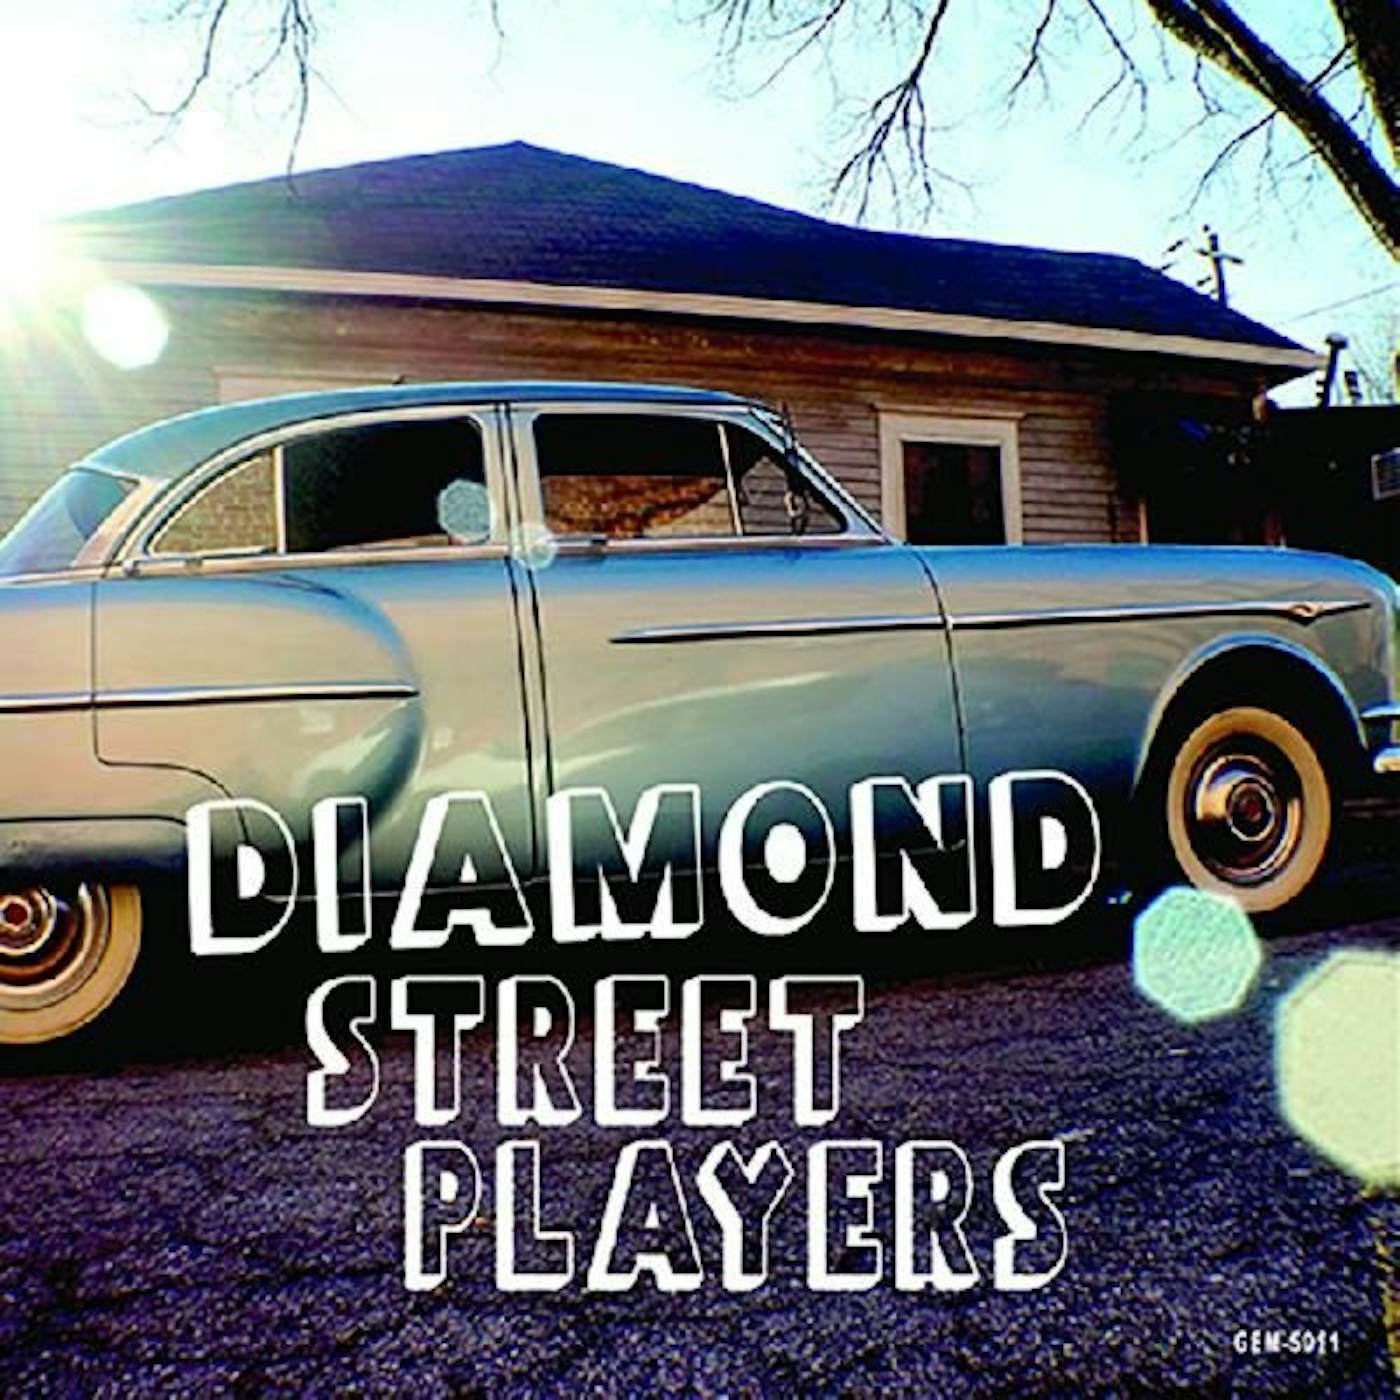 Diamond Street Players Vinyl Record